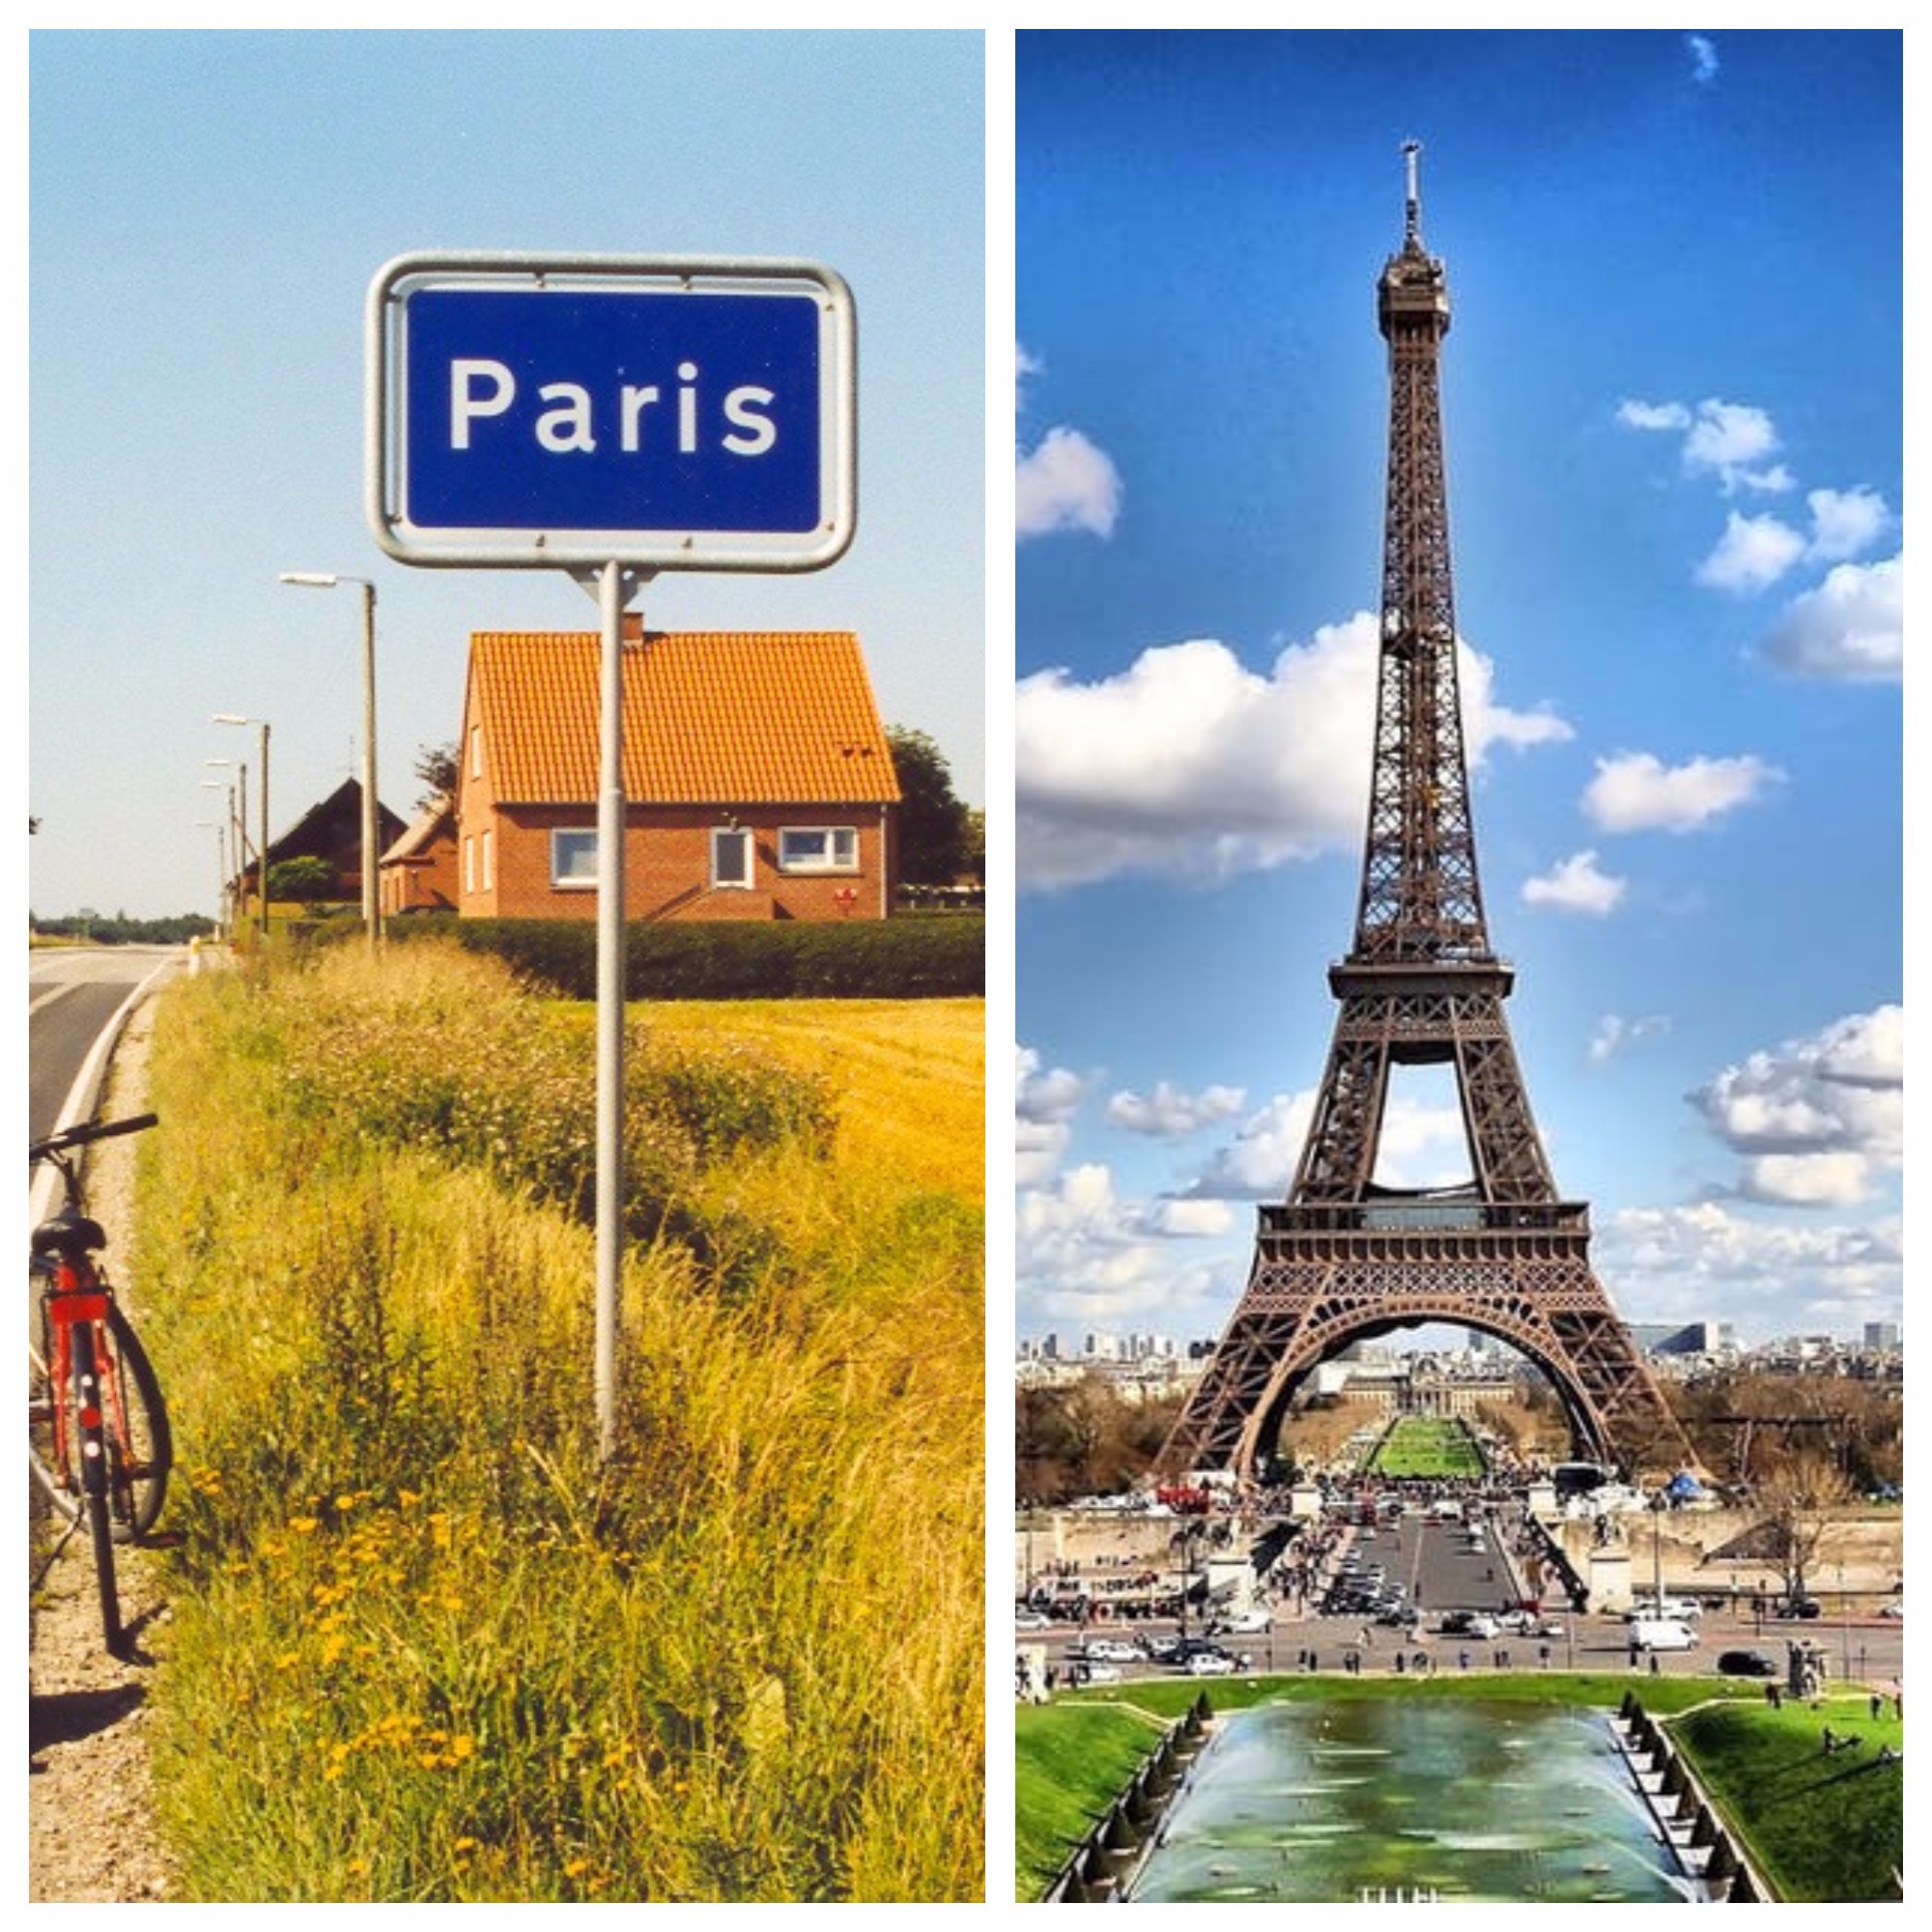 Paris around the world